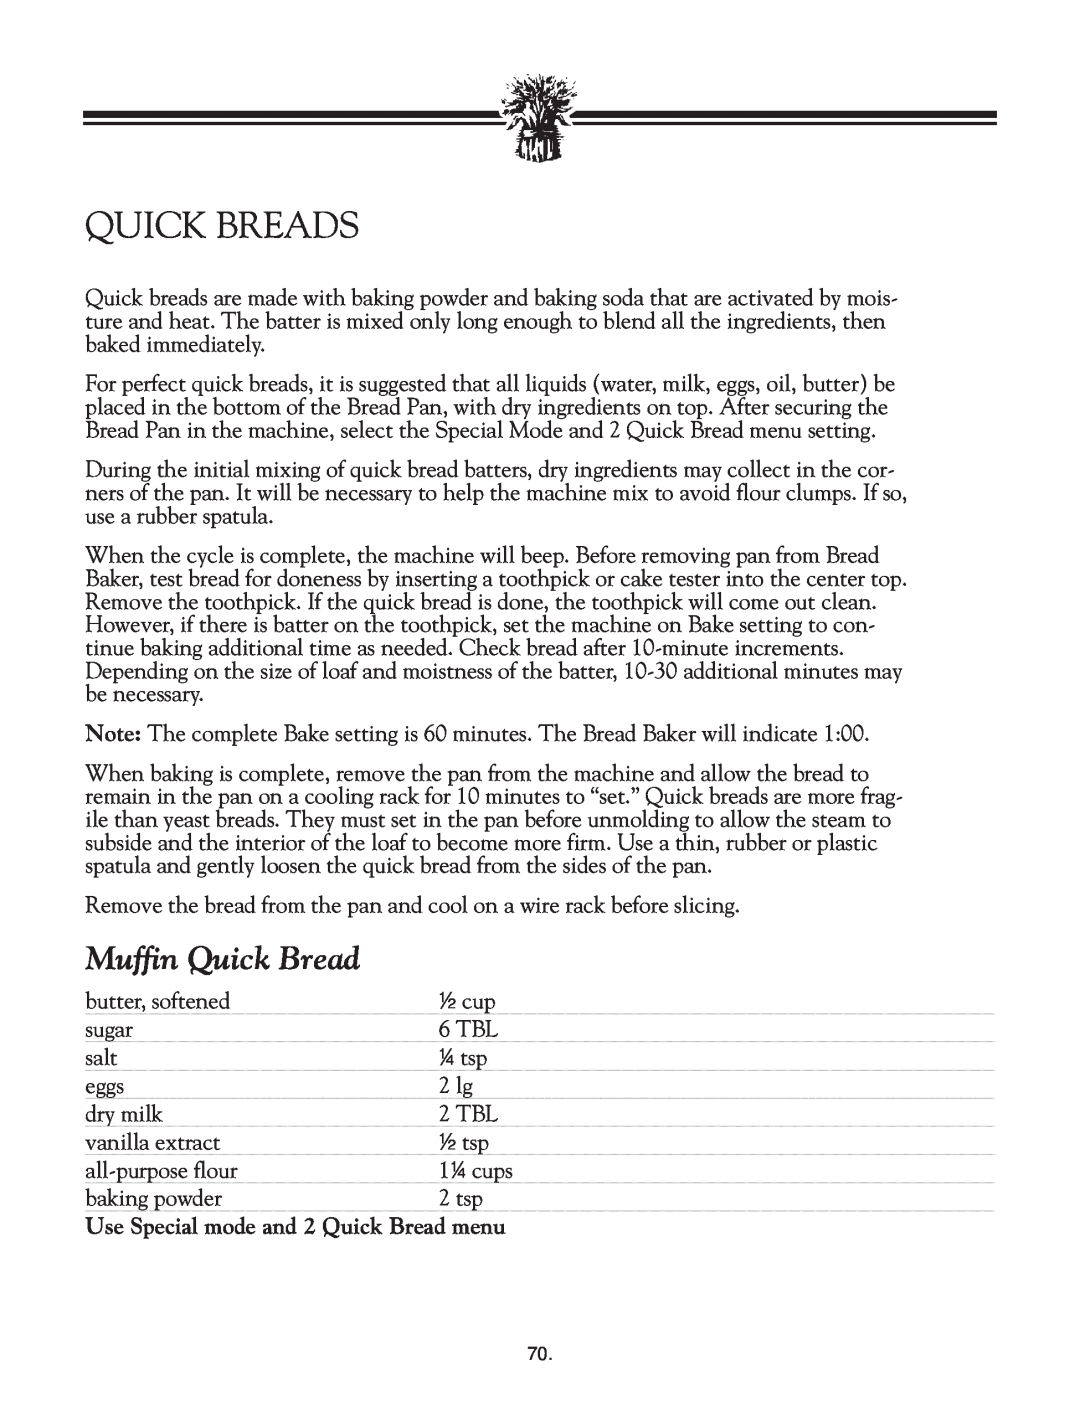 Breadman TR2828G instruction manual Quick Breads, Muffin Quick Bread 